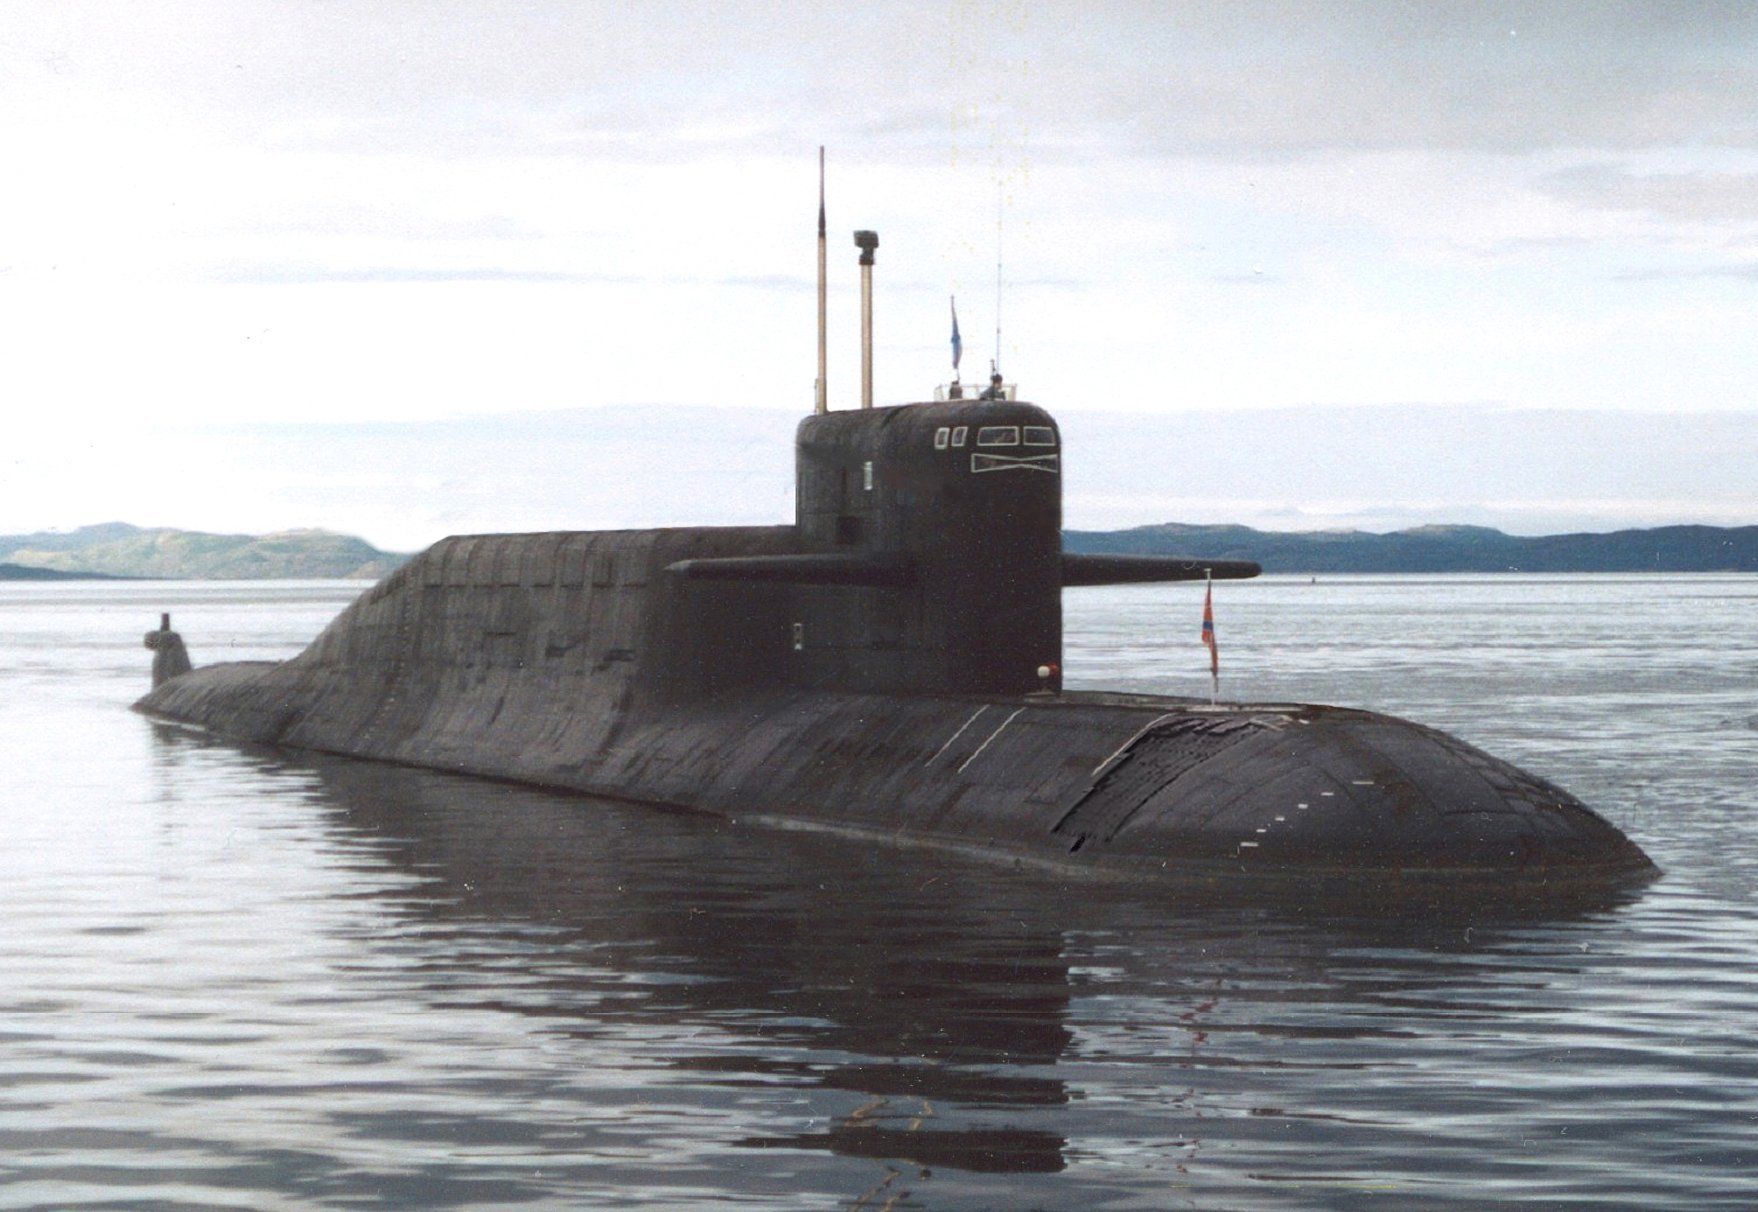 Пл тка. Подводная лодка 667бдрм "Дельфин". 667 БДРМ подводная лодка. АПЛ проекта 667 БДРМ. Проект 667 БДРМ Дельфин.